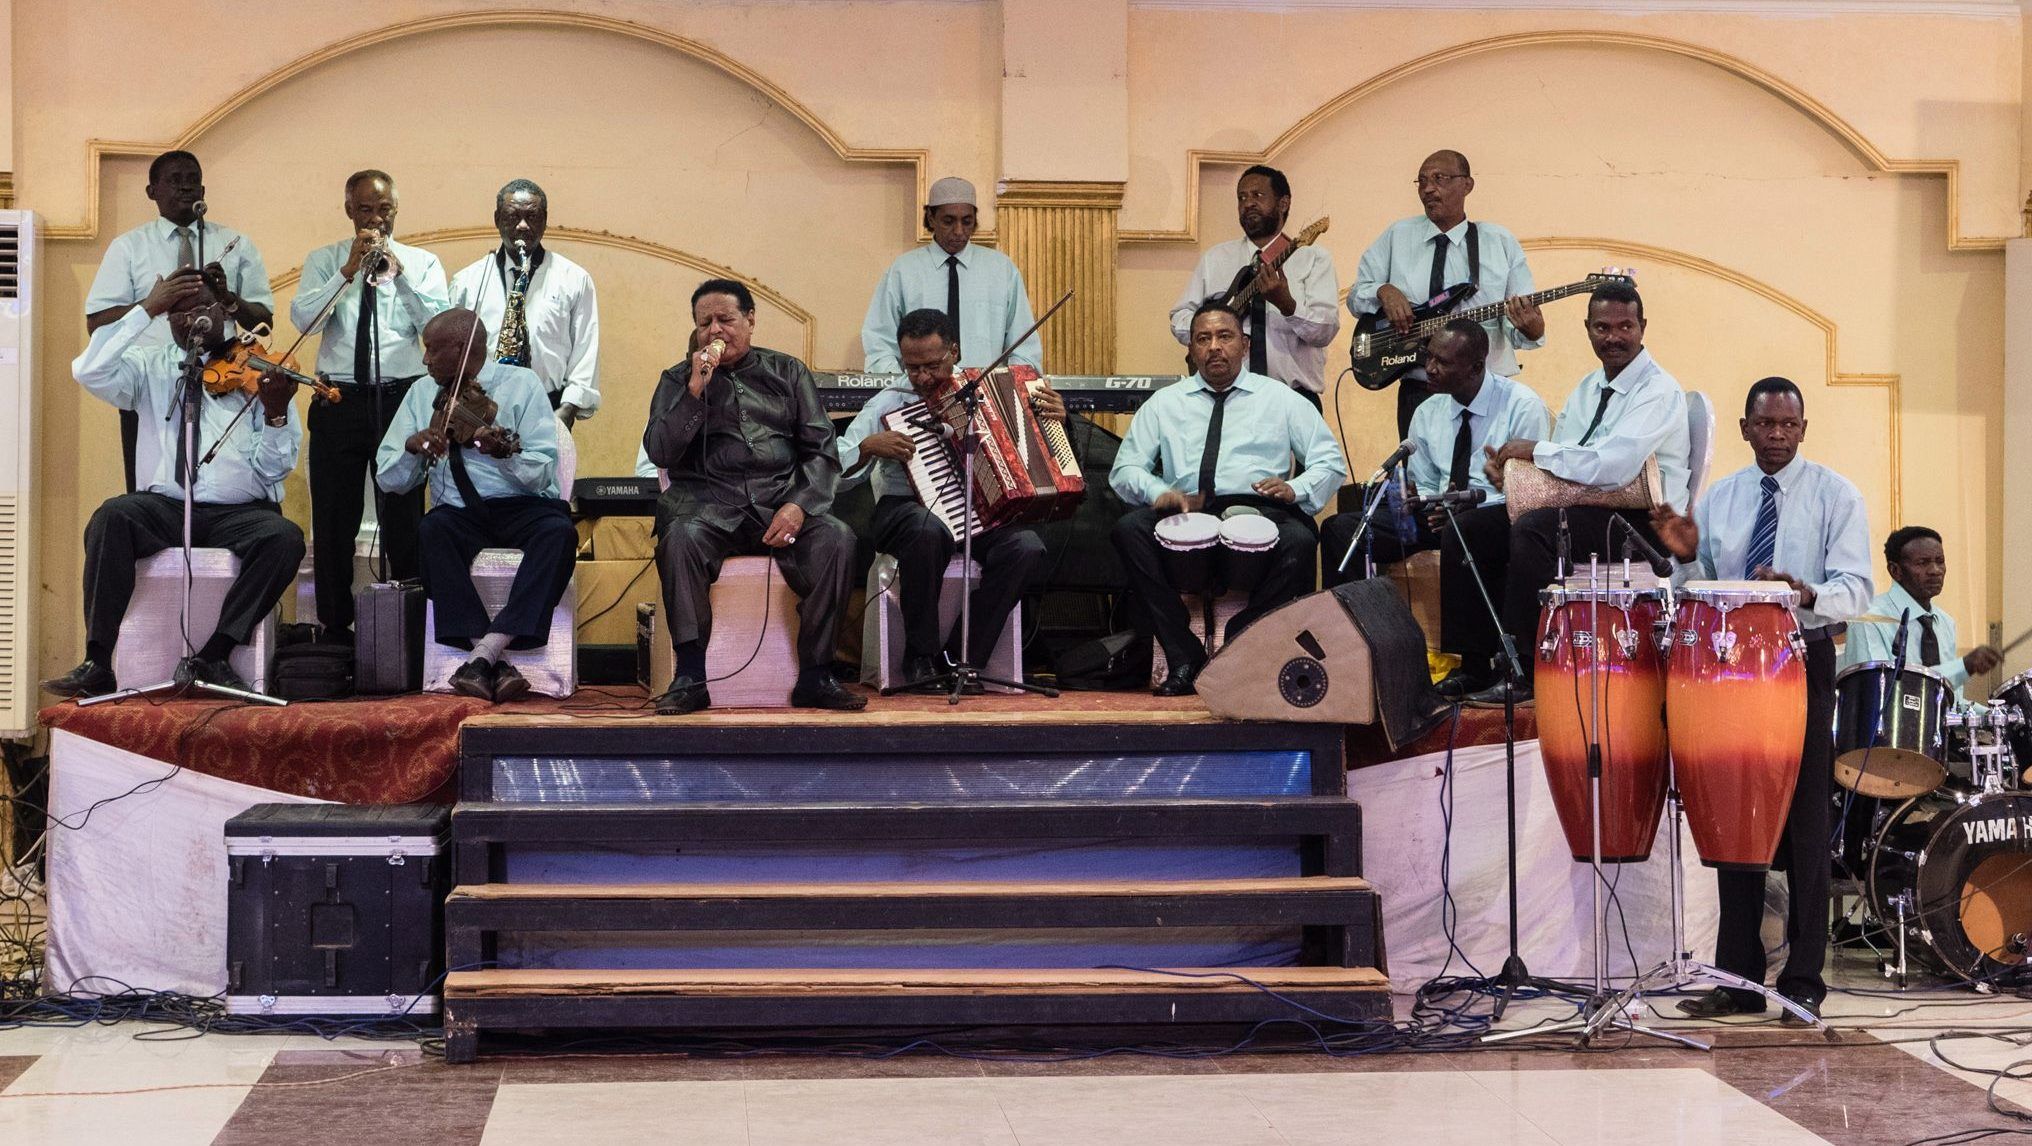 This album documents the lasting impact of Sudan on African music